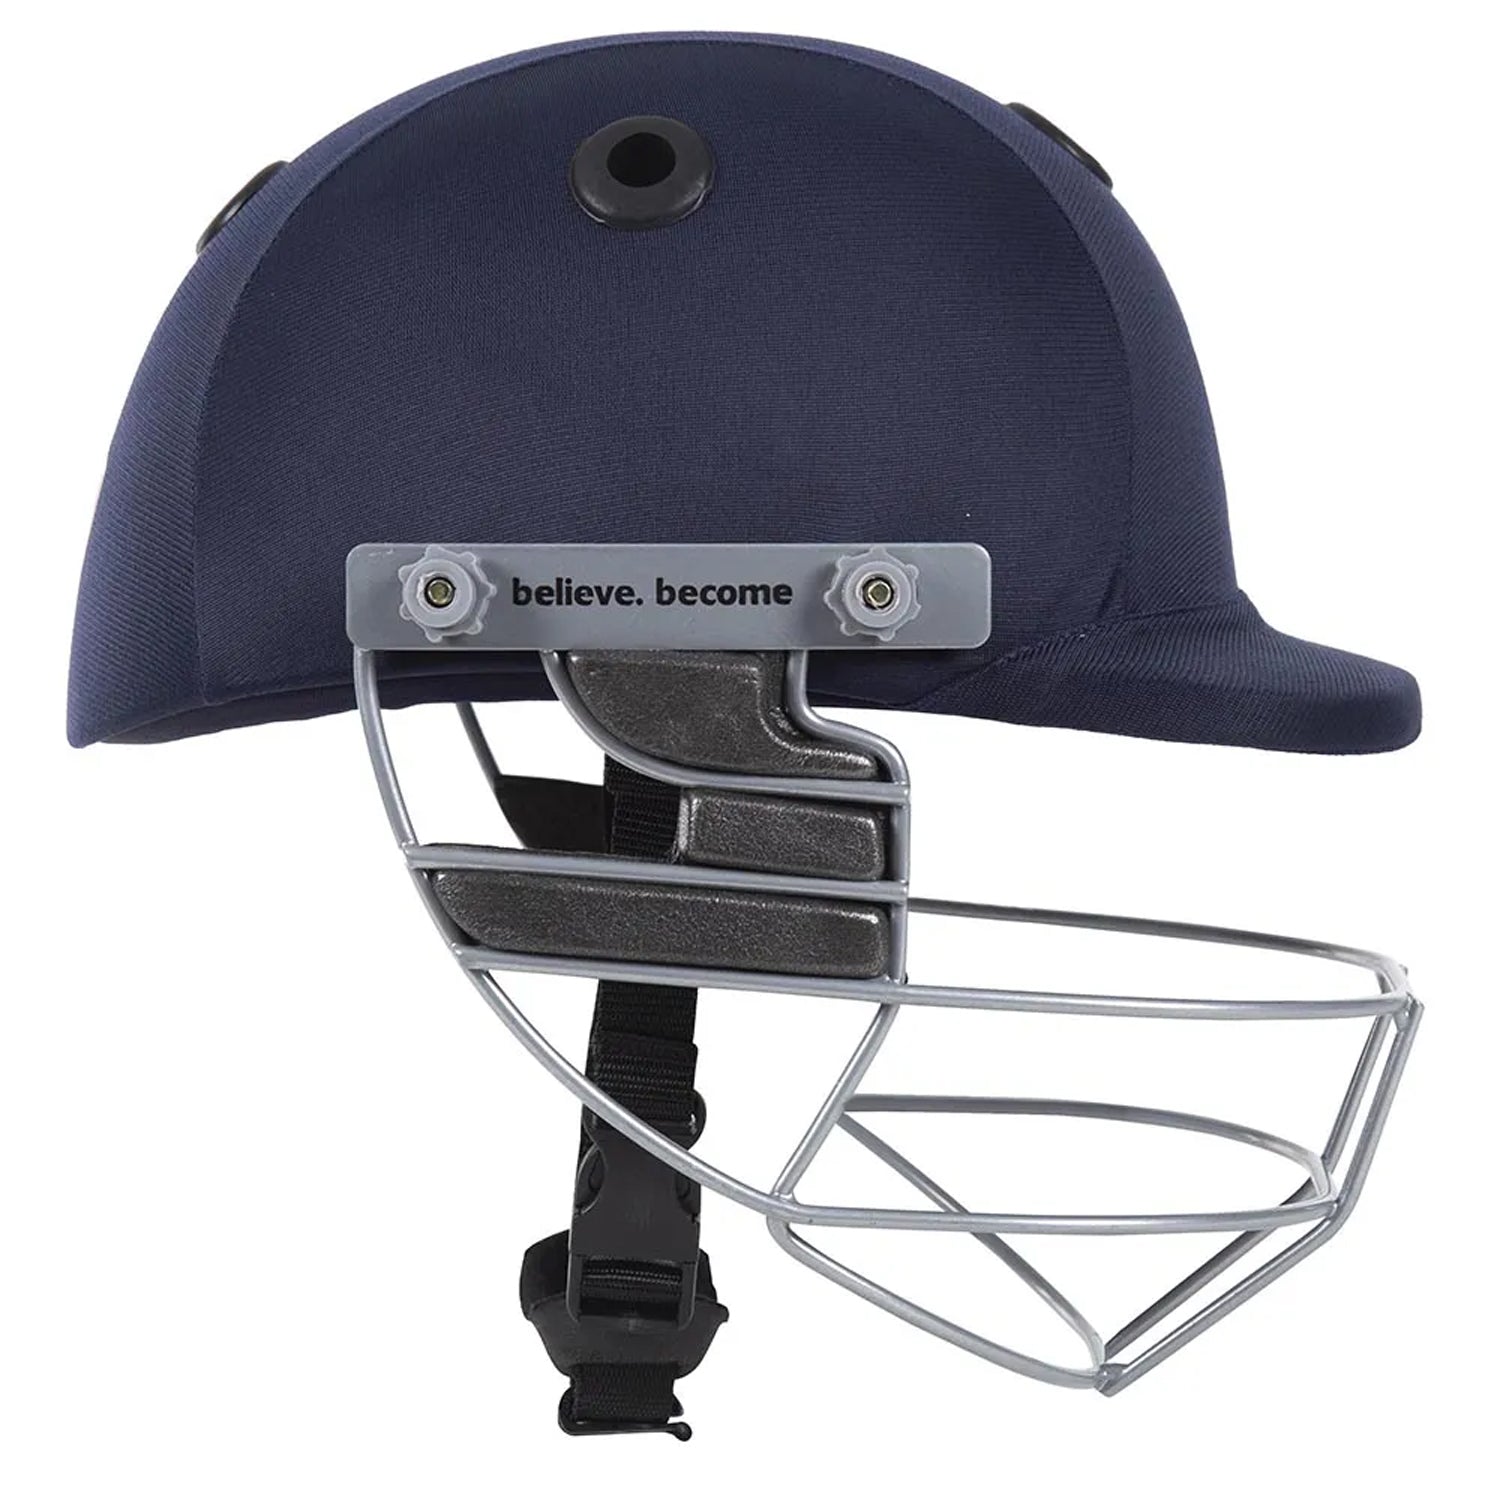 SG Smartech Cricket Helmet - Best Price online Prokicksports.com